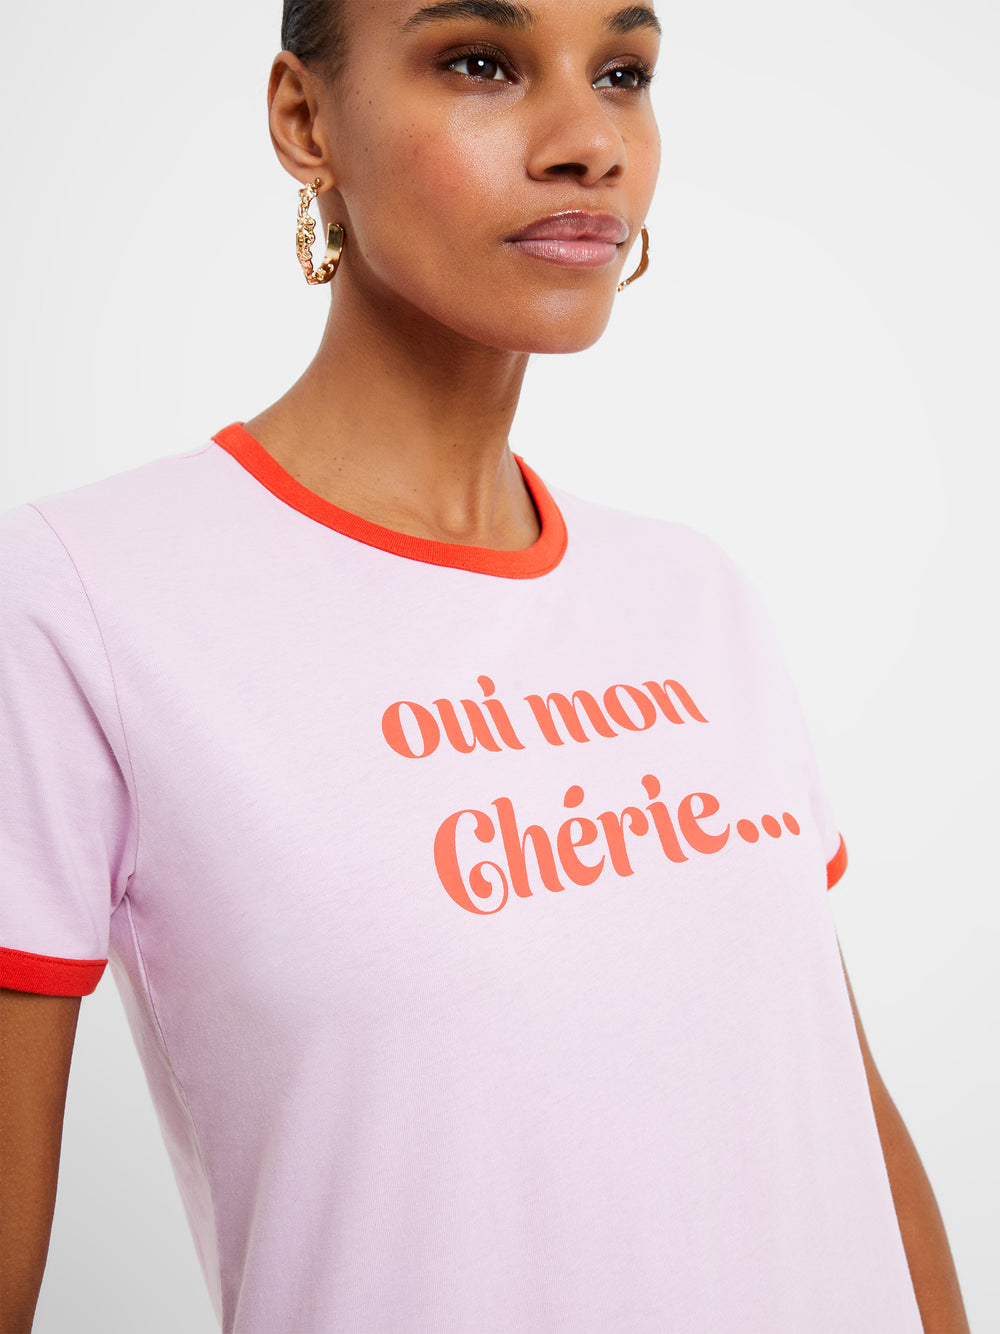 server Flourish Kræft Oui Mon Cherie Ringer T-Shirt Pastel Pink/Red | French Connection UK